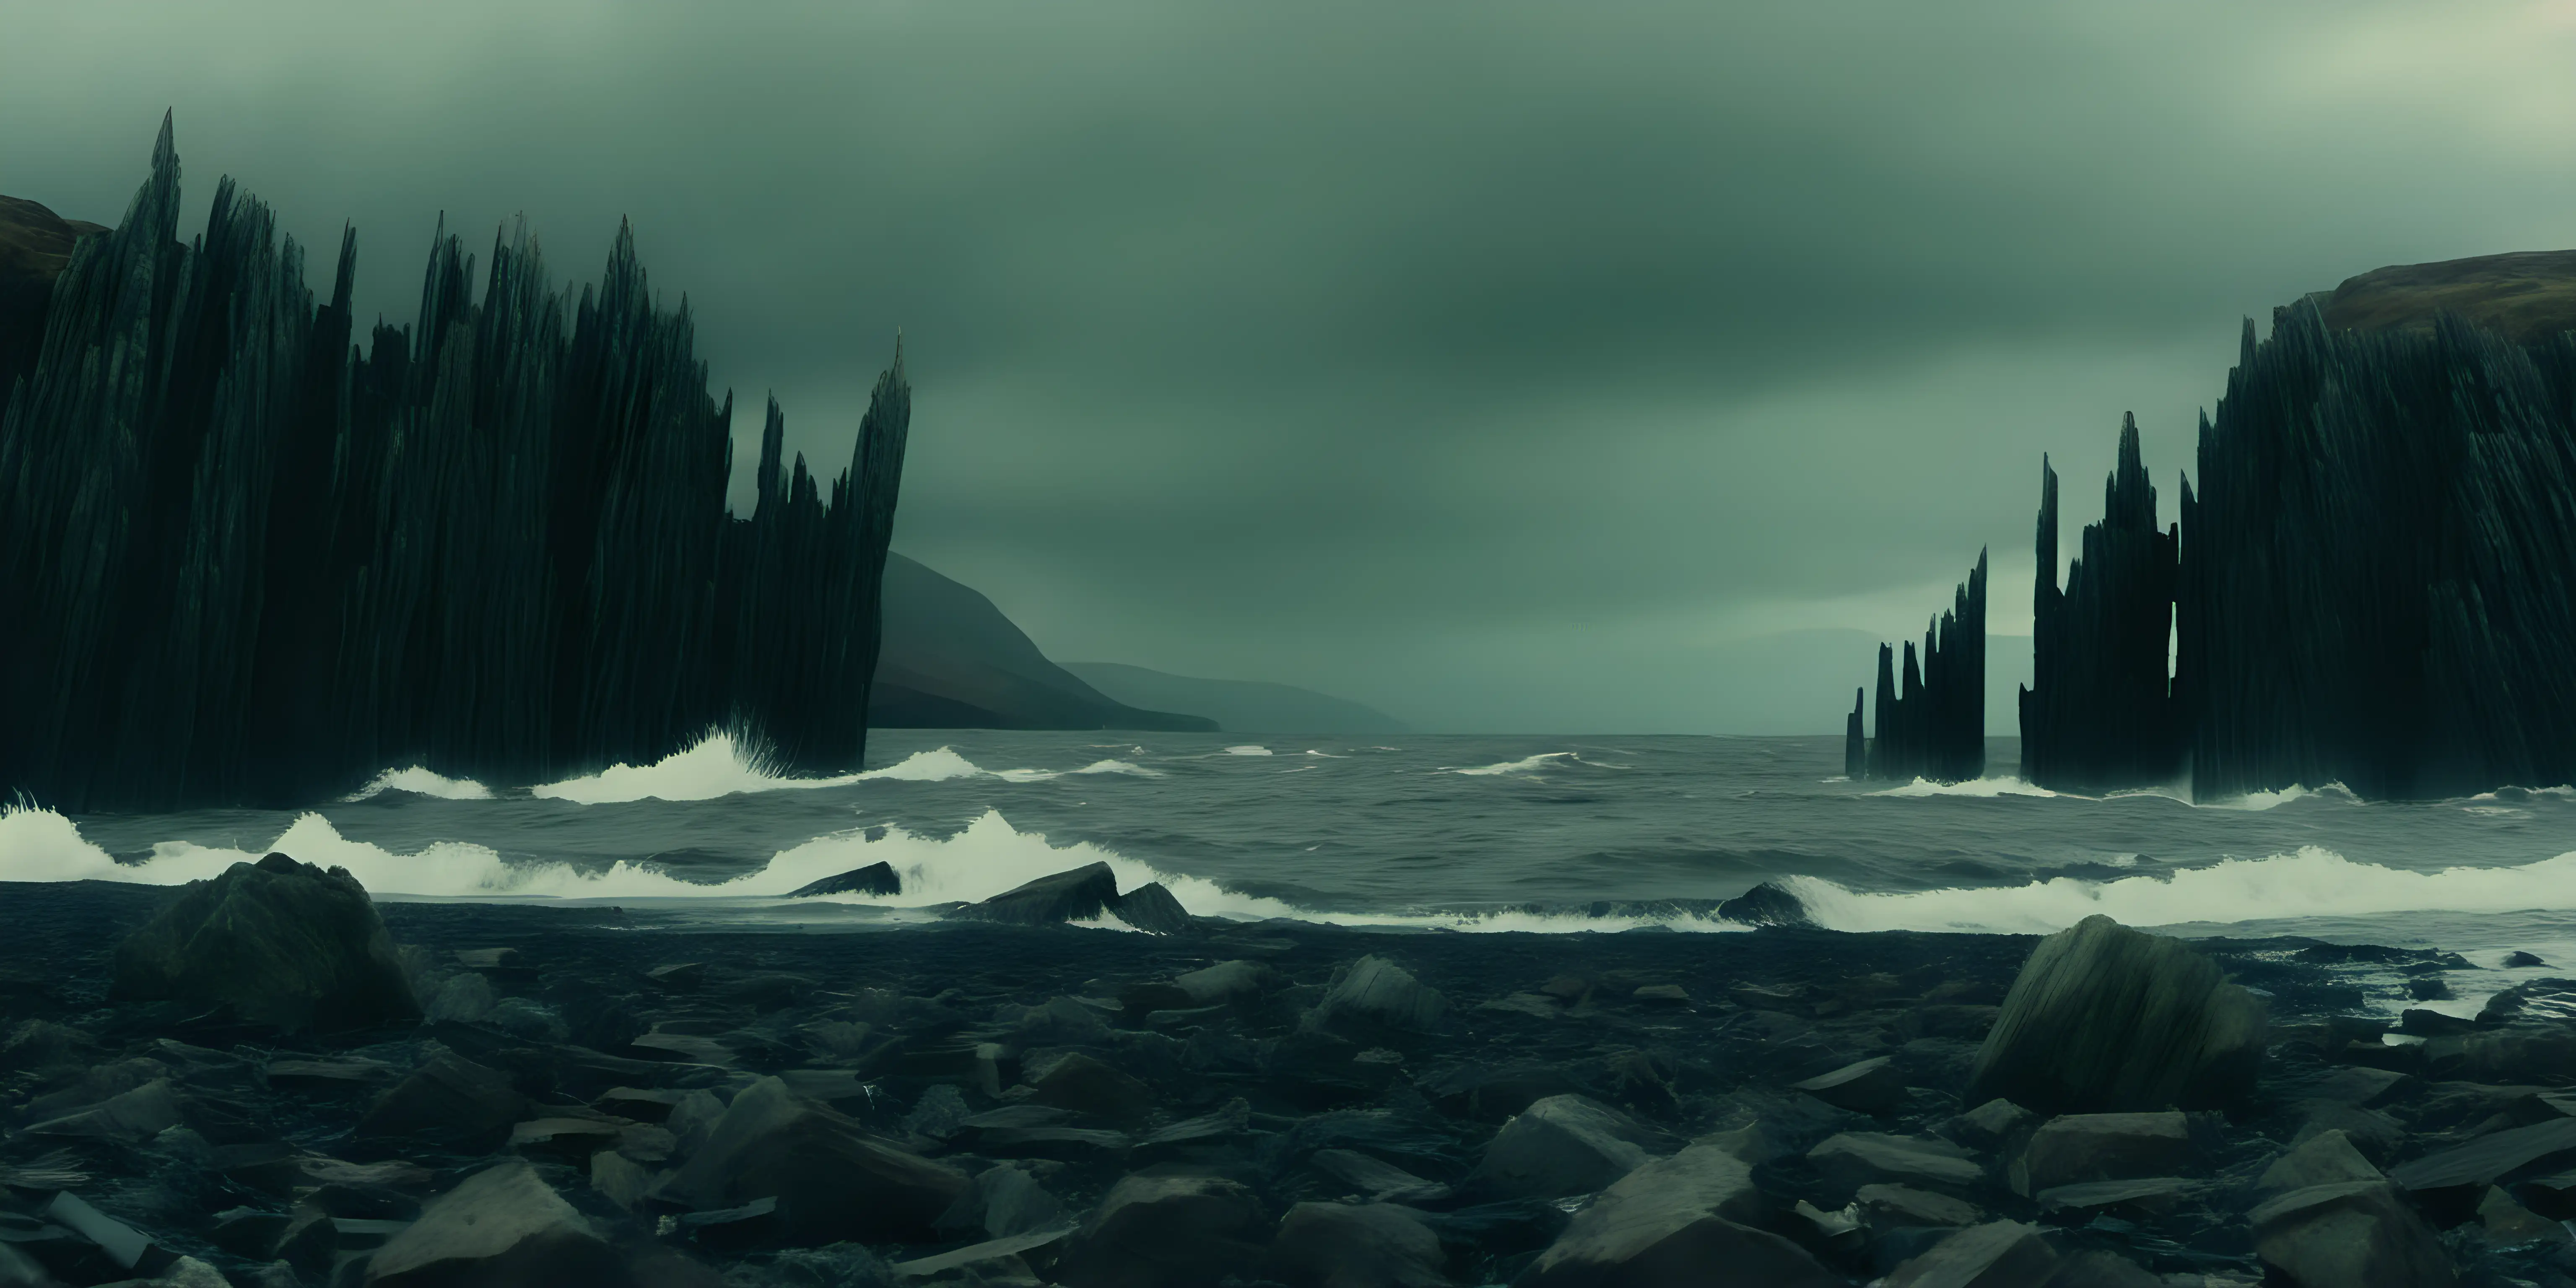 experimental cinematography, dystopian realism, transavanguardia, movie still, Scotland landscape, rocks, dramatic sea, end of the world, detail realistic, whq